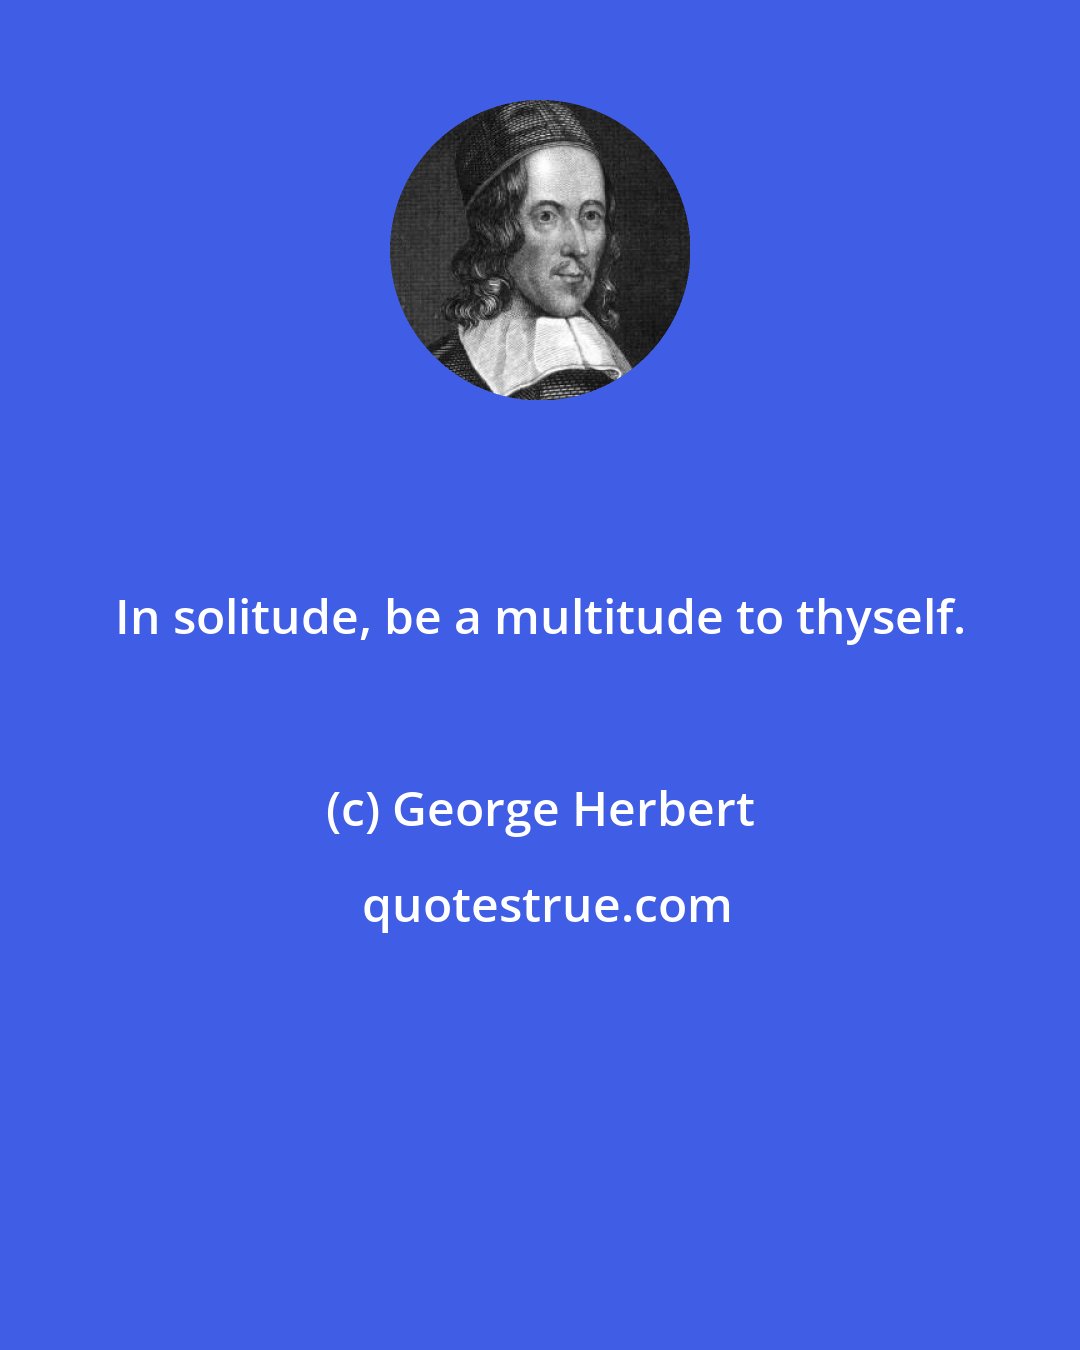 George Herbert: In solitude, be a multitude to thyself.